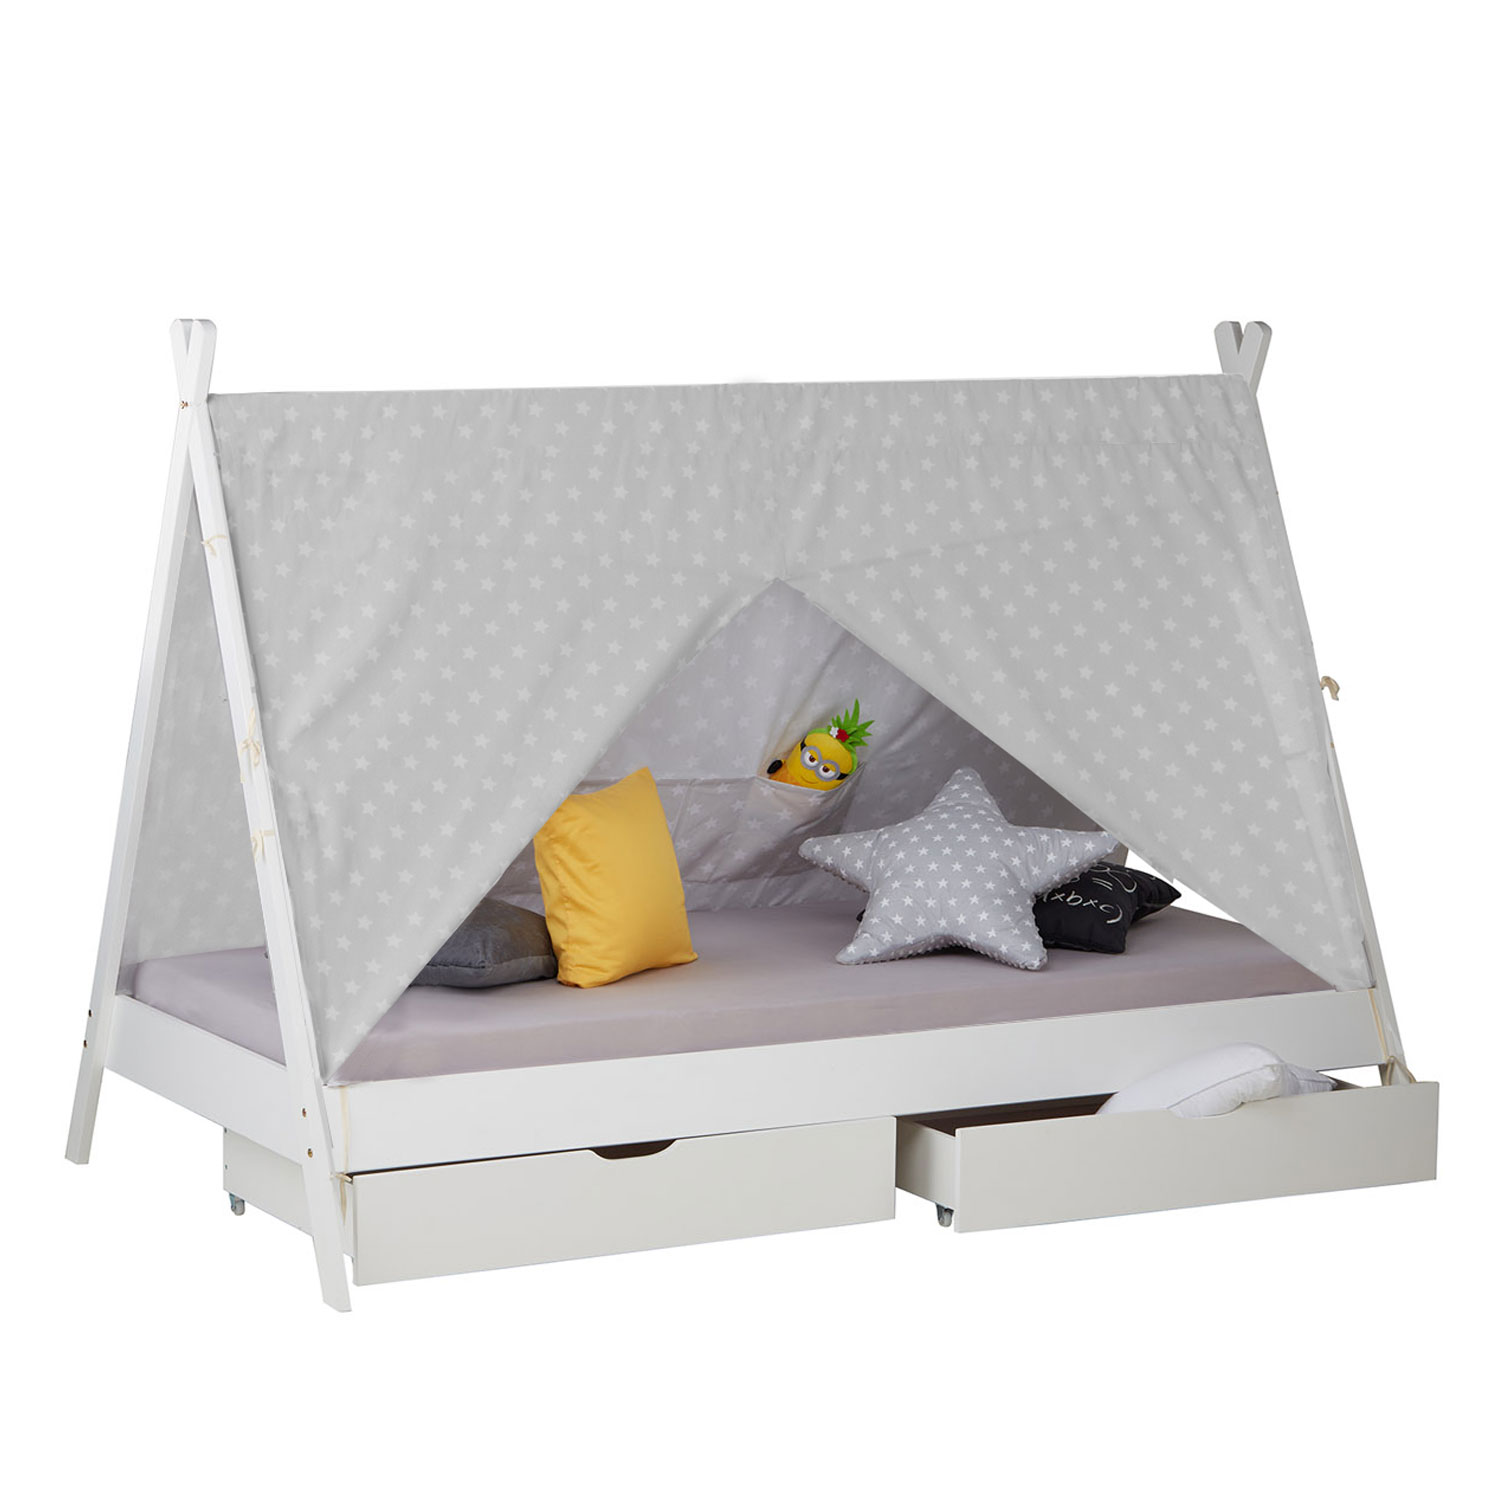 Kinderbett mit Matratze TIPI 90x200 Jugendbett weiß grau Holzbett Kinderzimmer Stoff Bettkasten